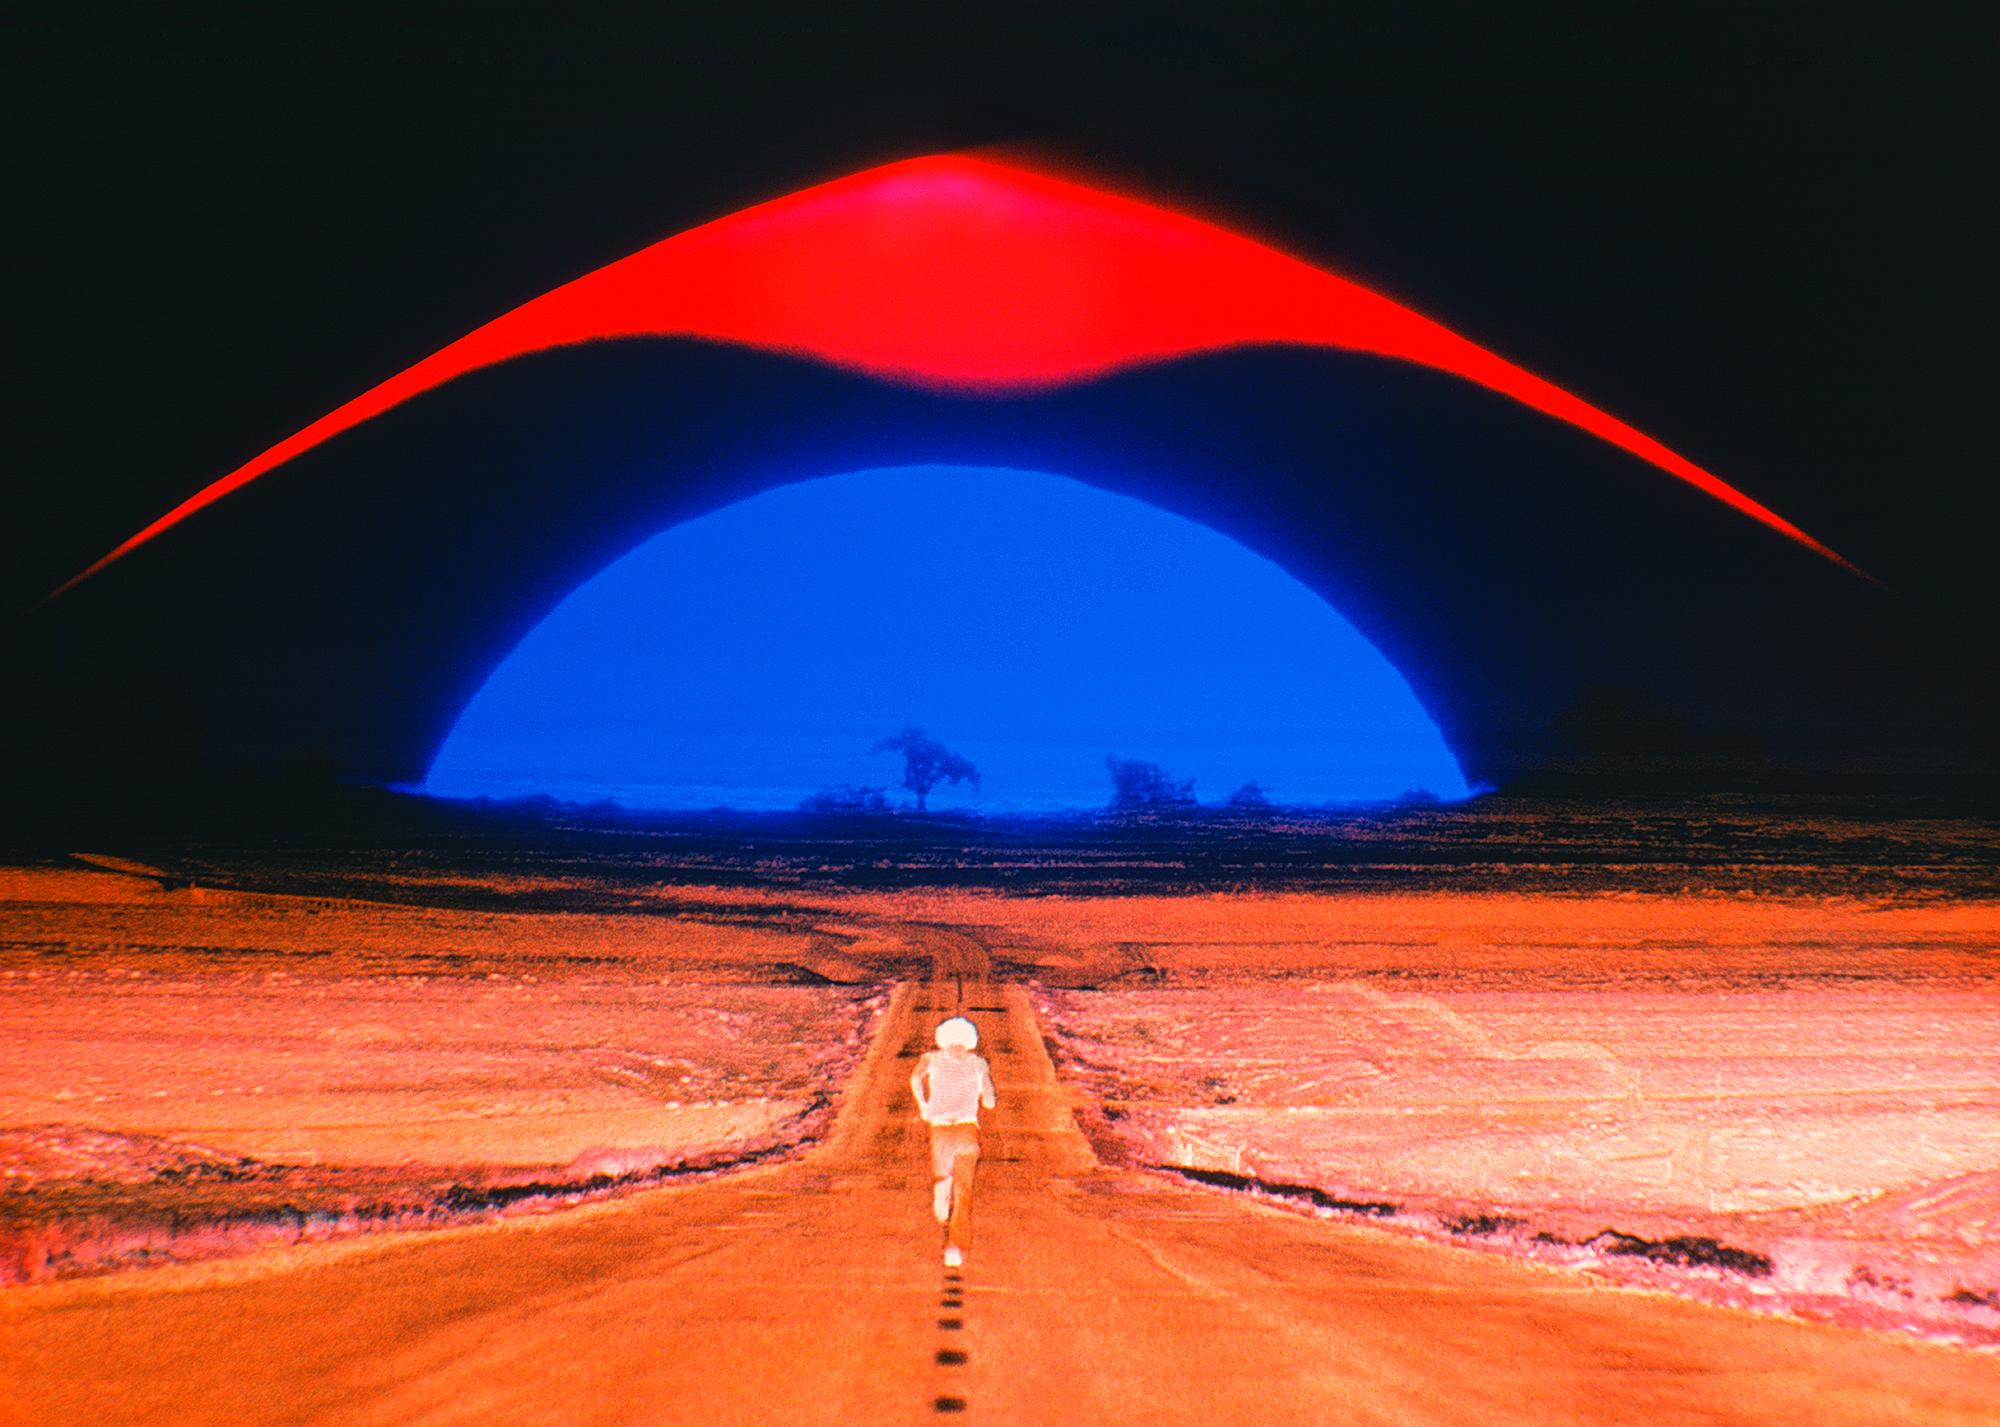 Mitchell Funk Landscape Photograph – Sci-fi  Einzelner Single Man, Surreal Road to Destiny, Kamera 35-Deckel  - Surrealismus -